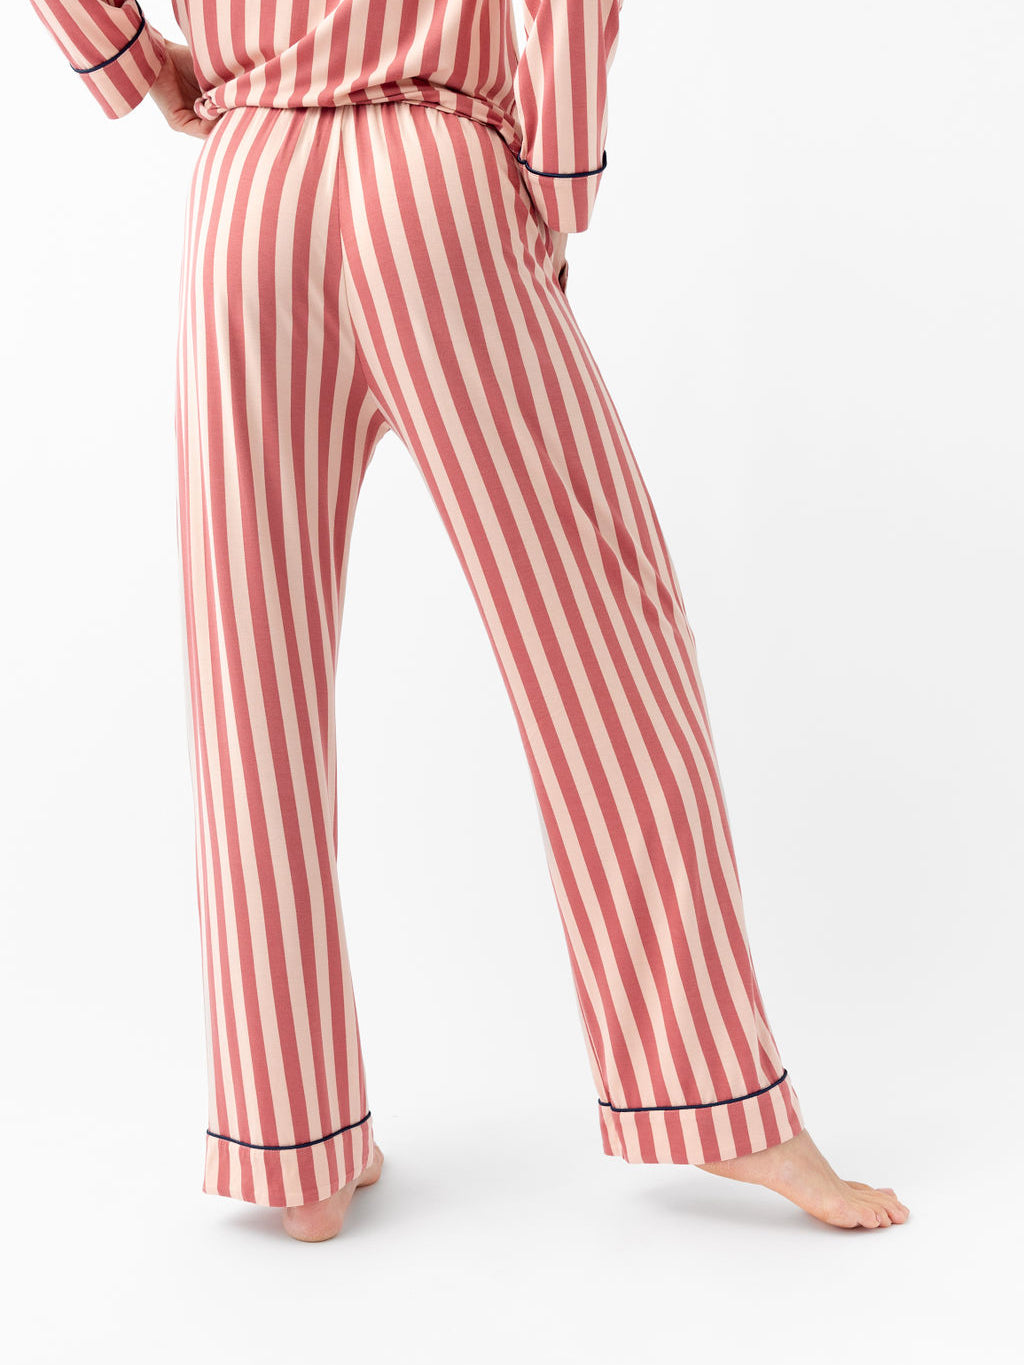 Woman wearing blush stripe pajama pants with white background 